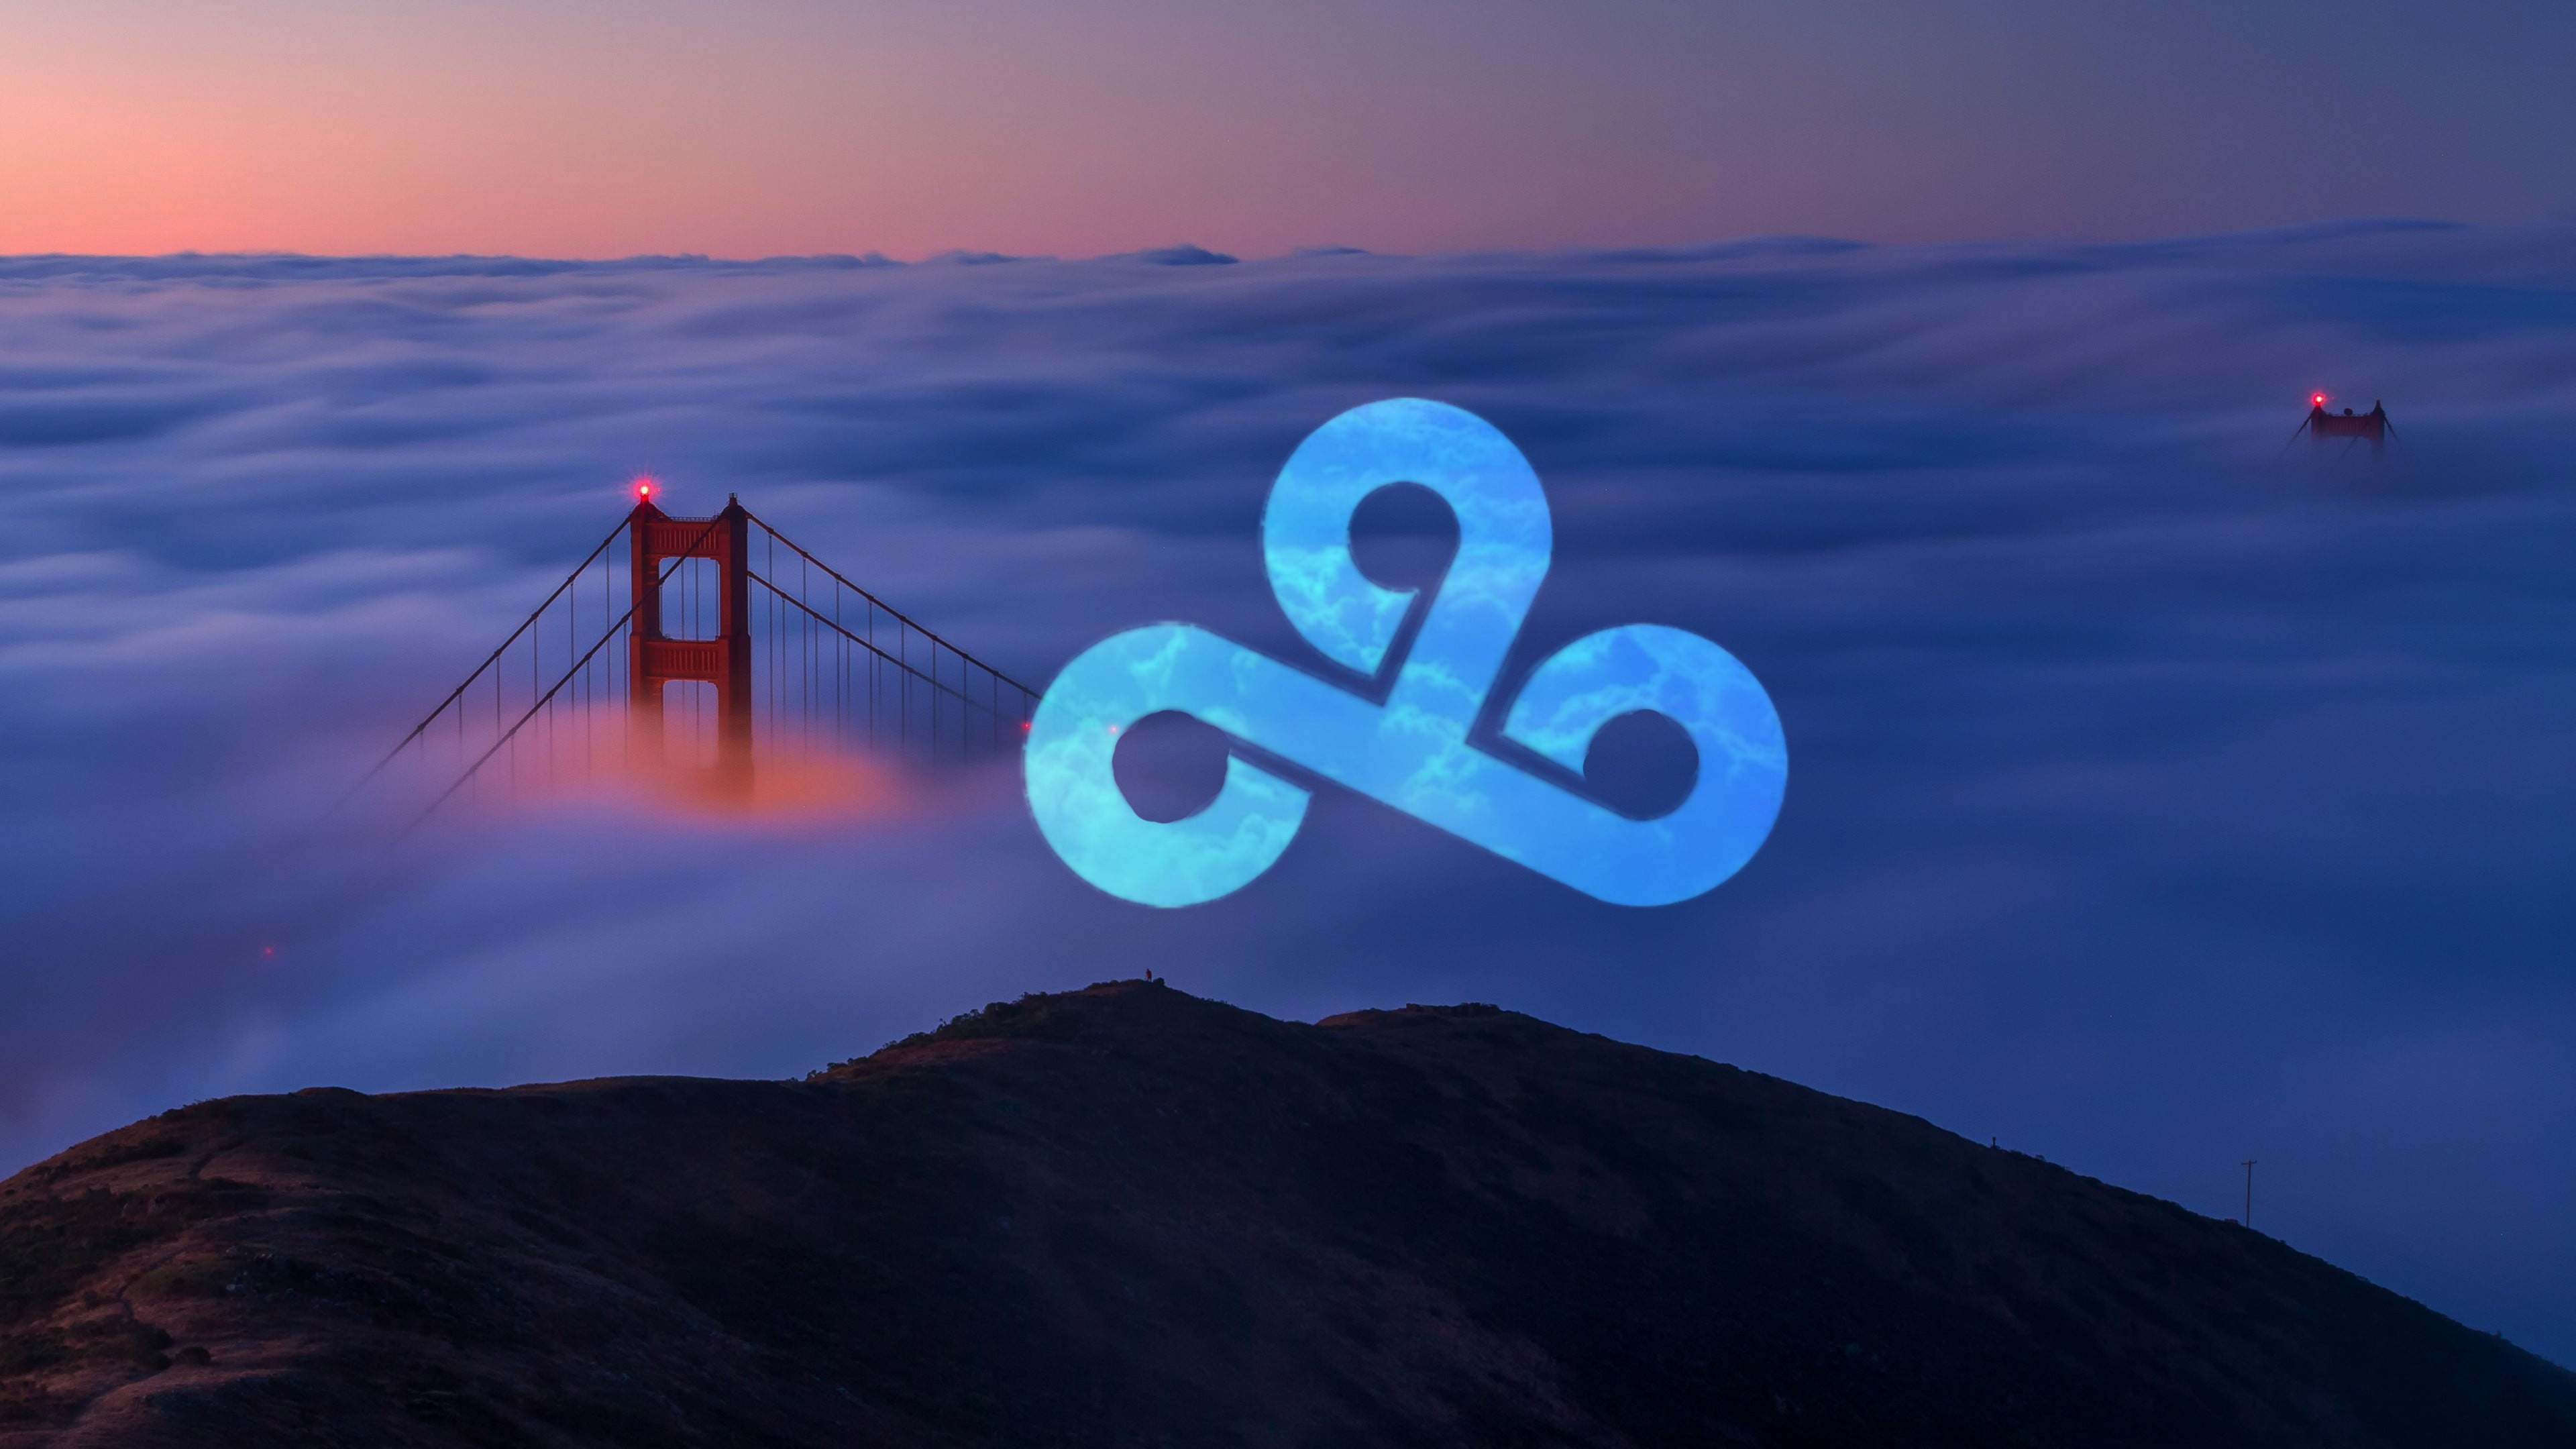 Cloud 9 logo, Cloud9, clouds, bridge, nature